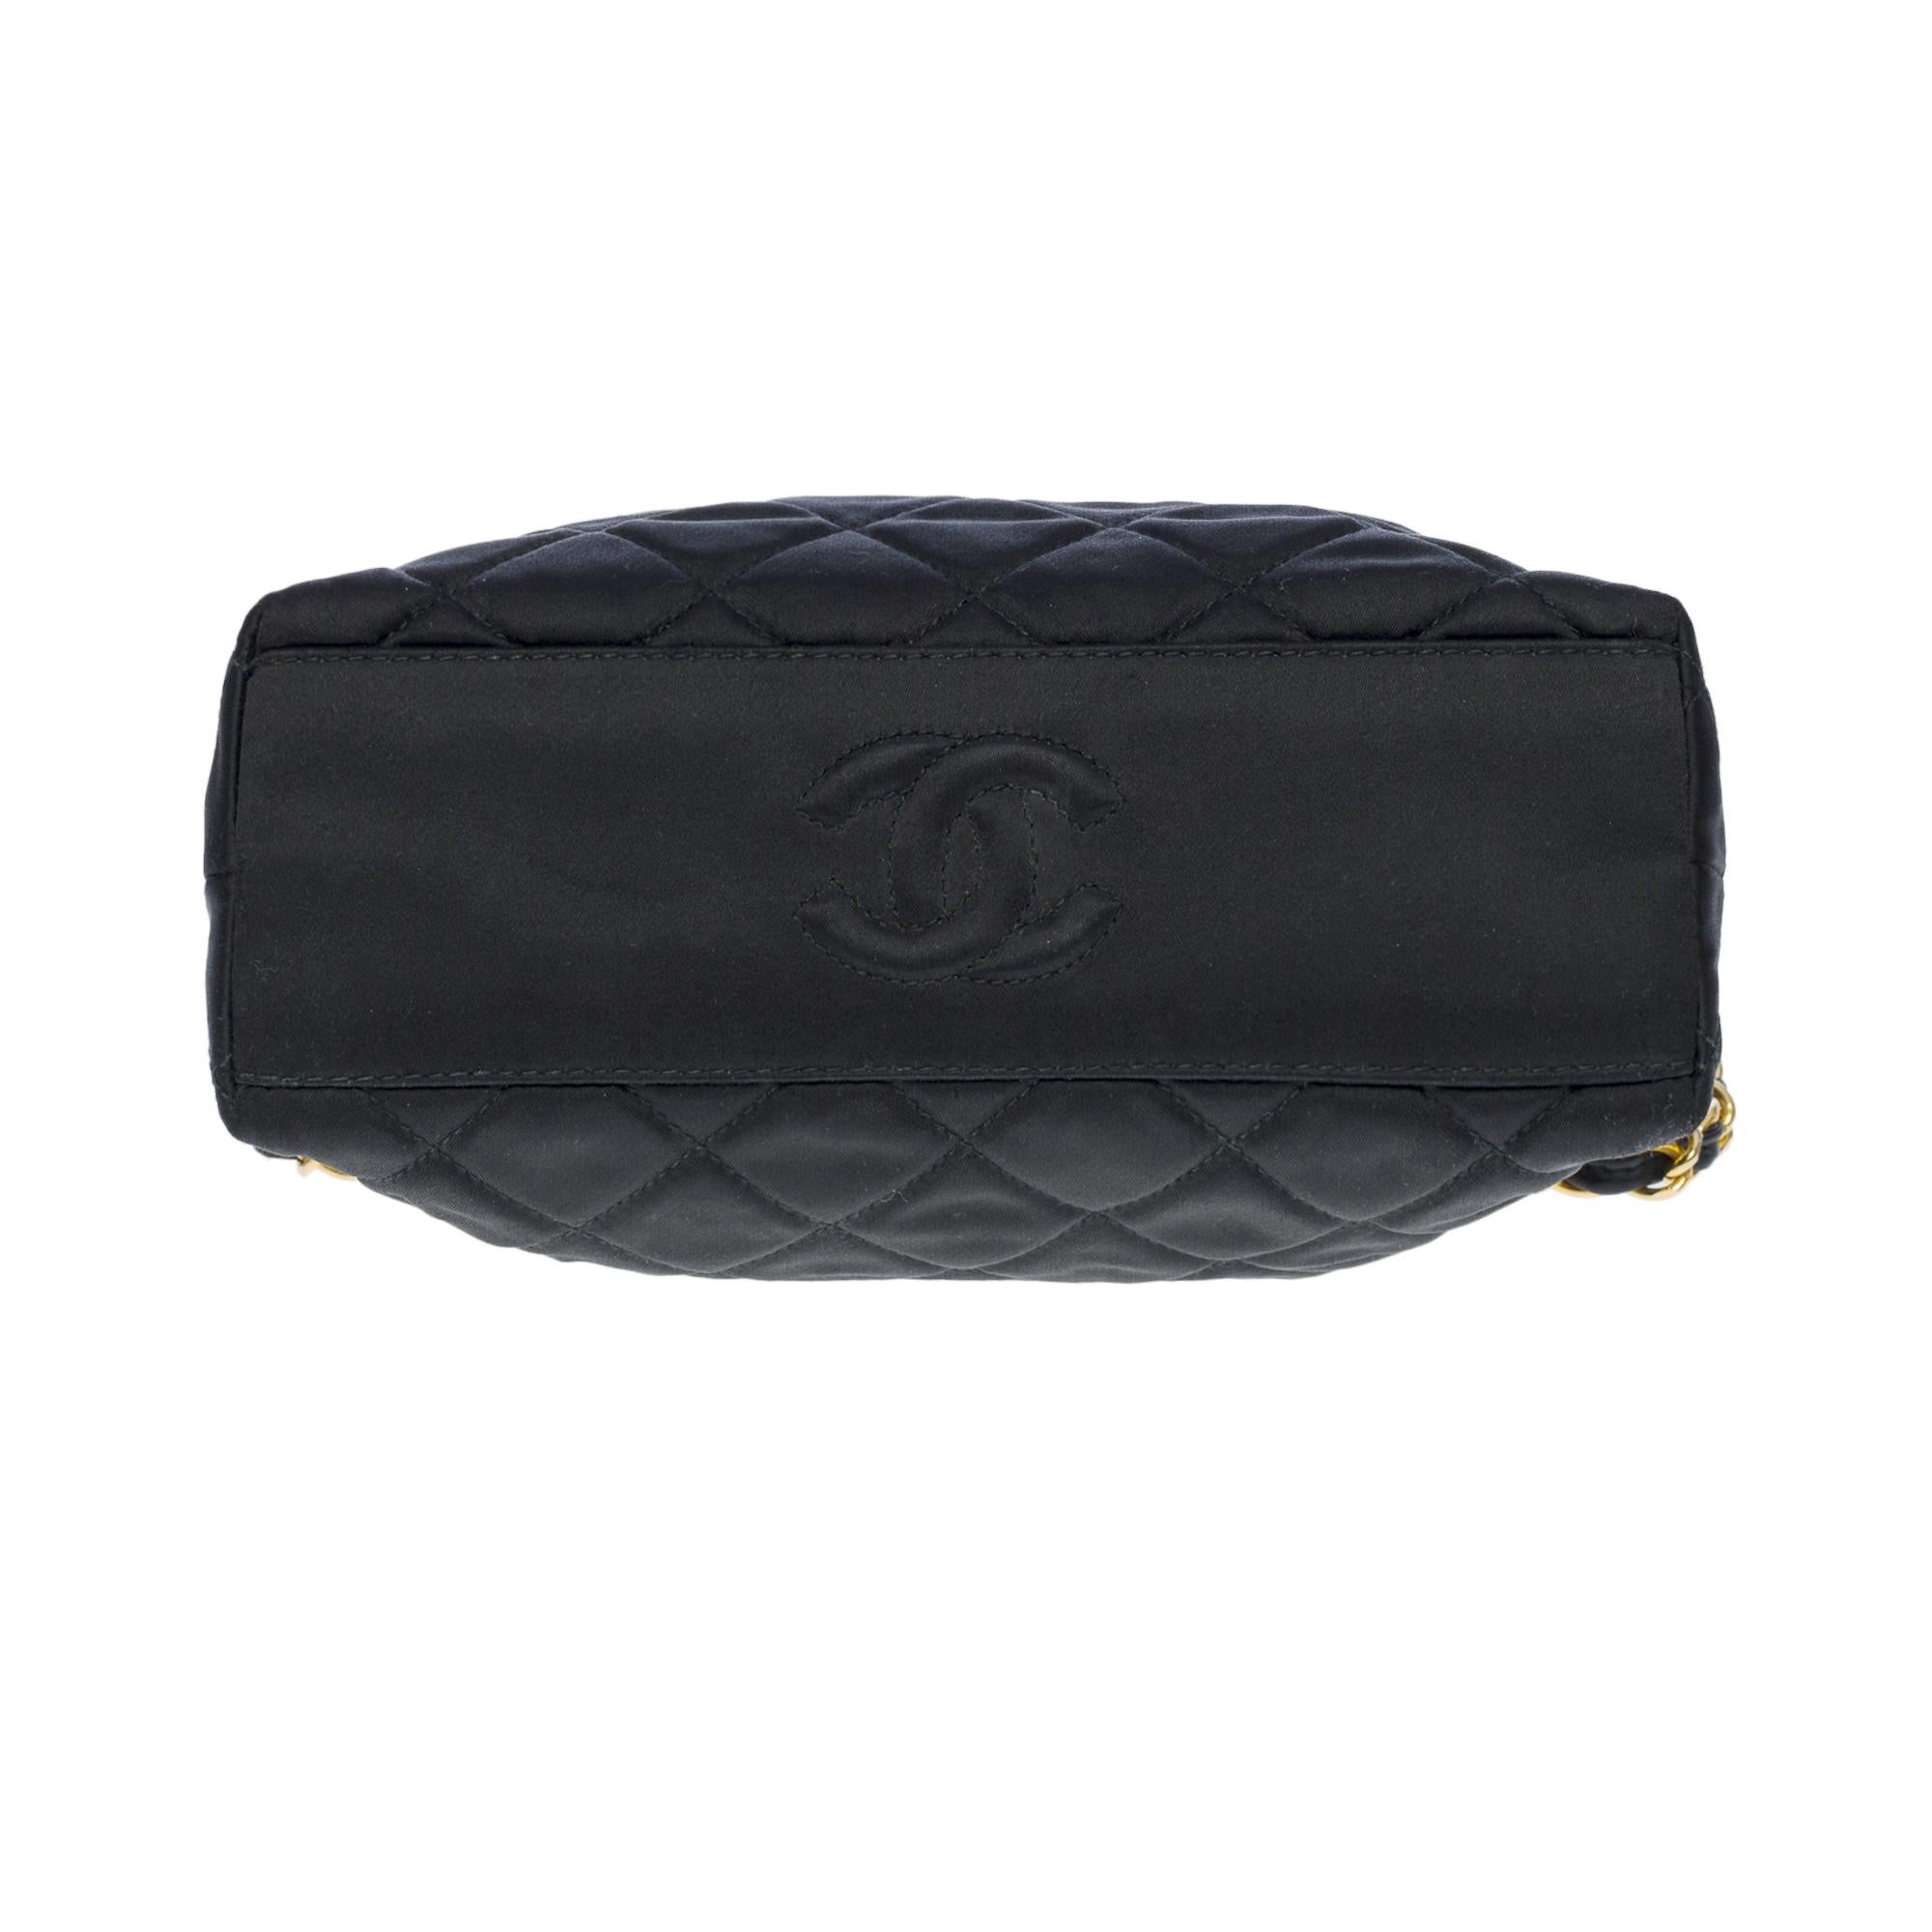 Collector & Rare Chanel Sac du Soir shoulder bag in black quilted Satin, GHW 1